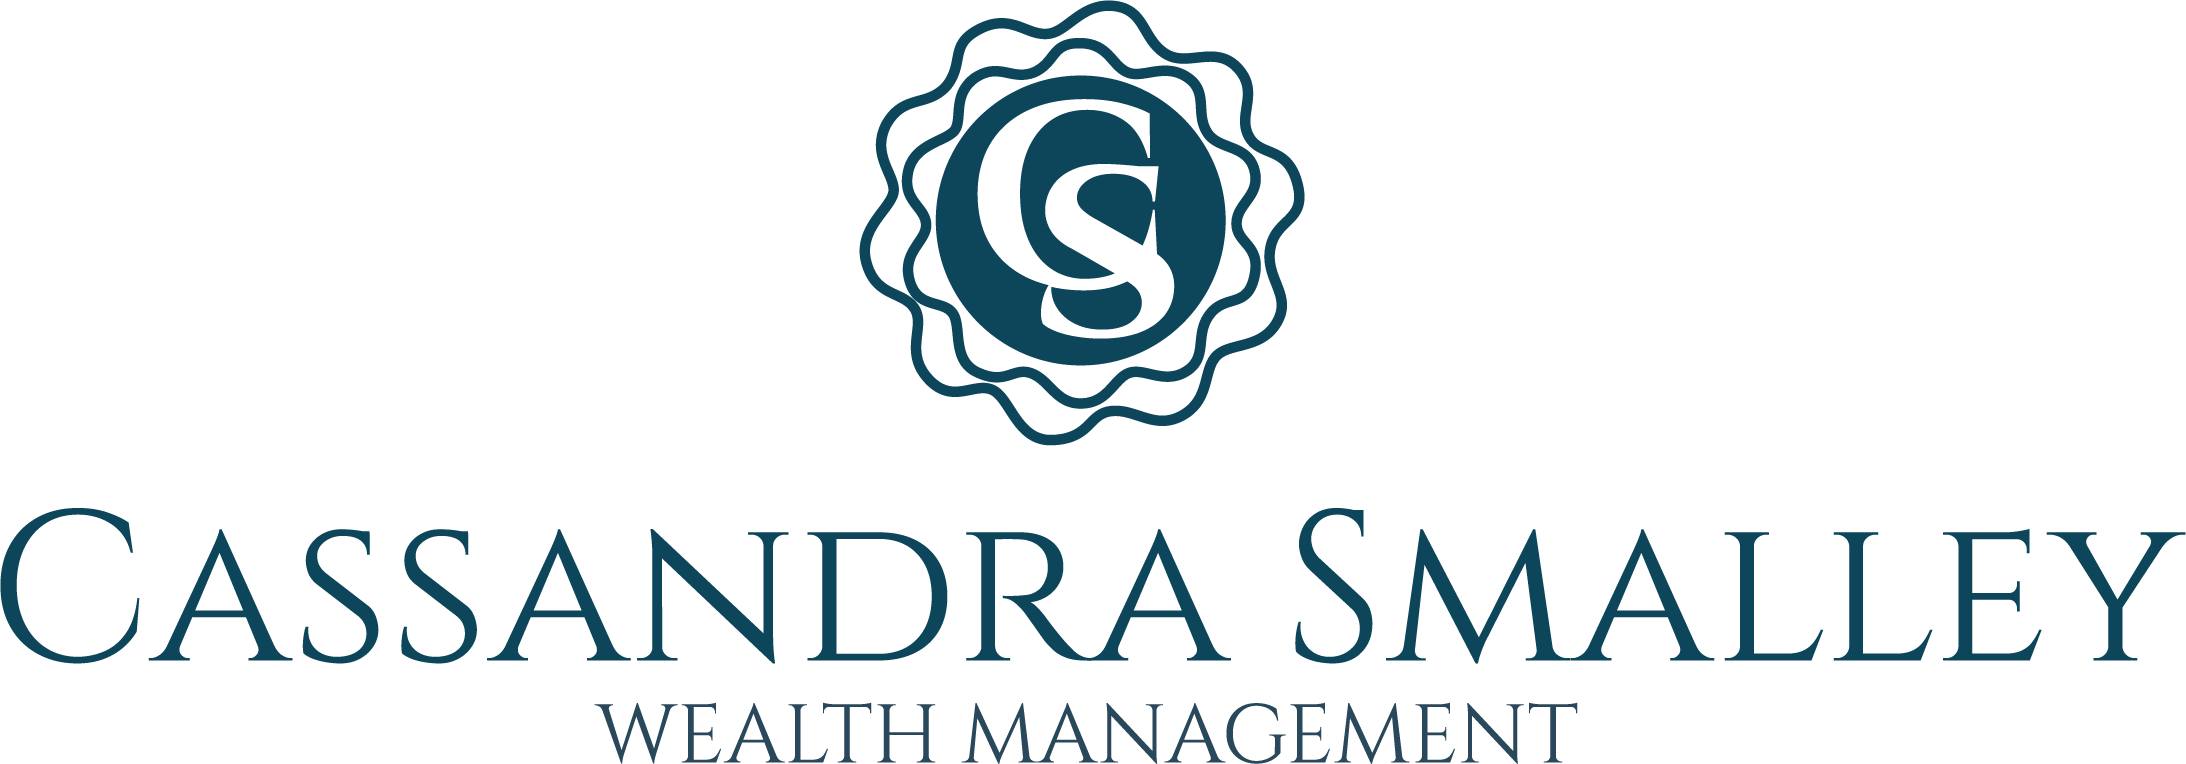 Cassandra Smalley Wealth Management